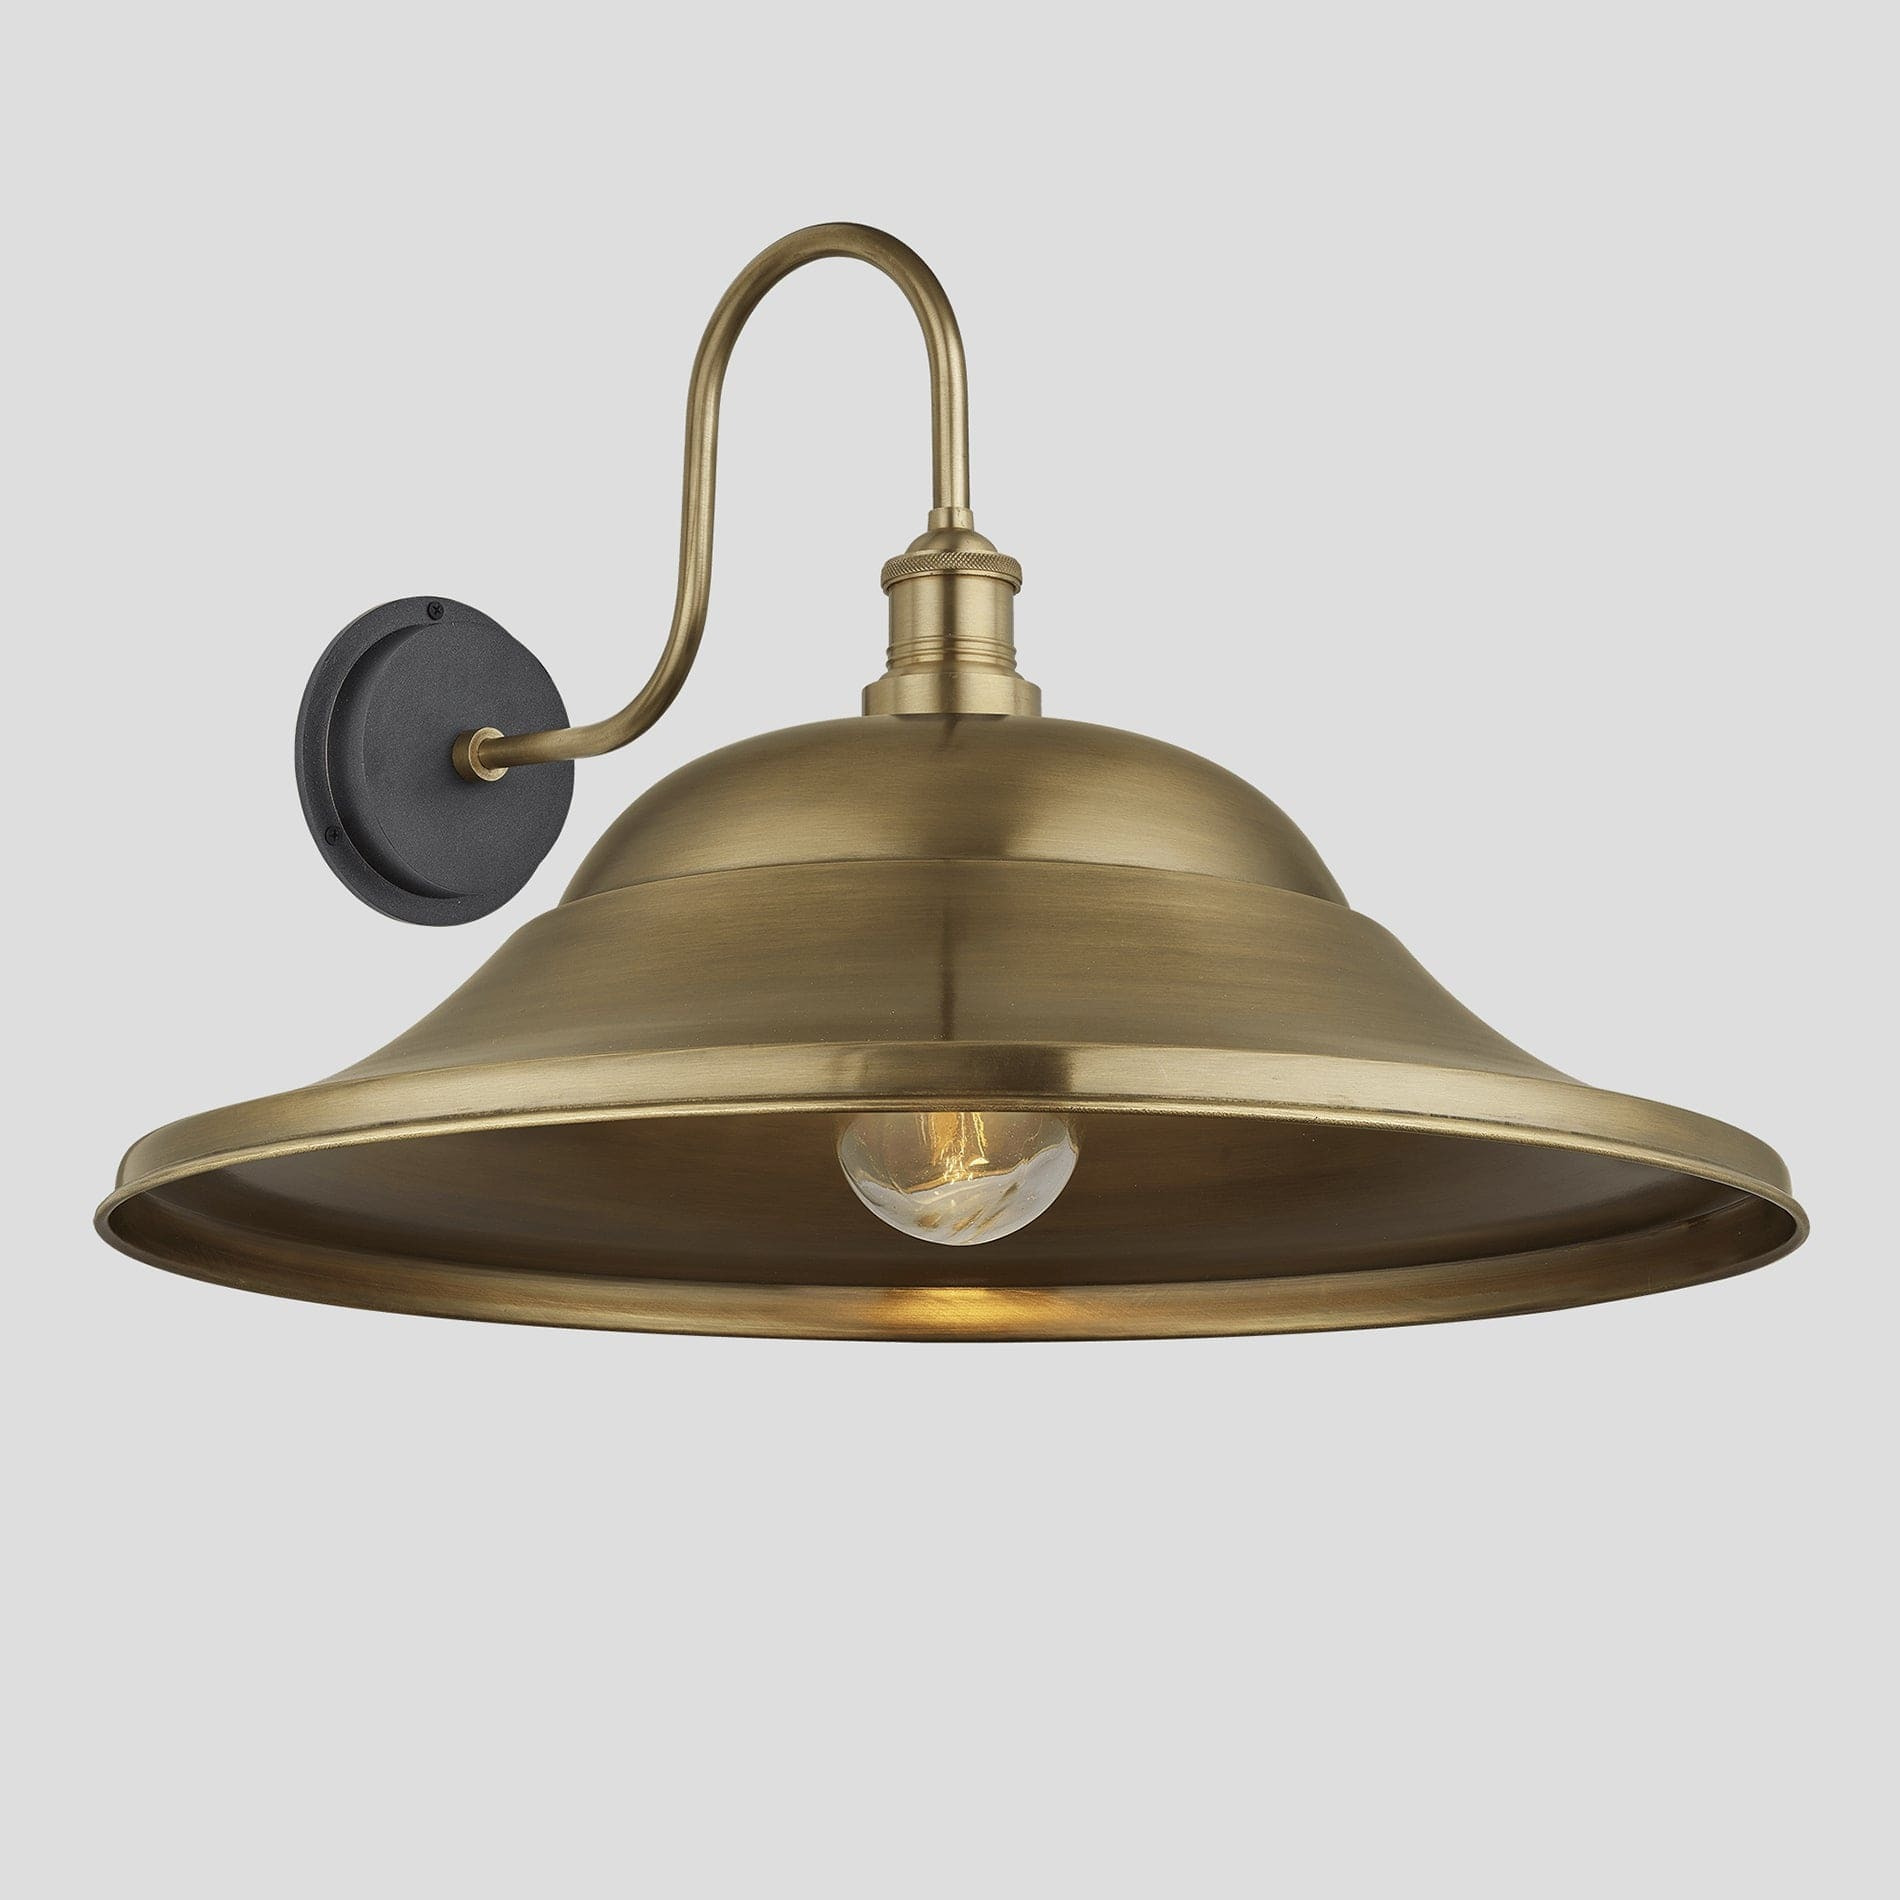 Swan Neck Outdoor & Bathroom Giant Hat Wall Light - 21 Inch – Brass